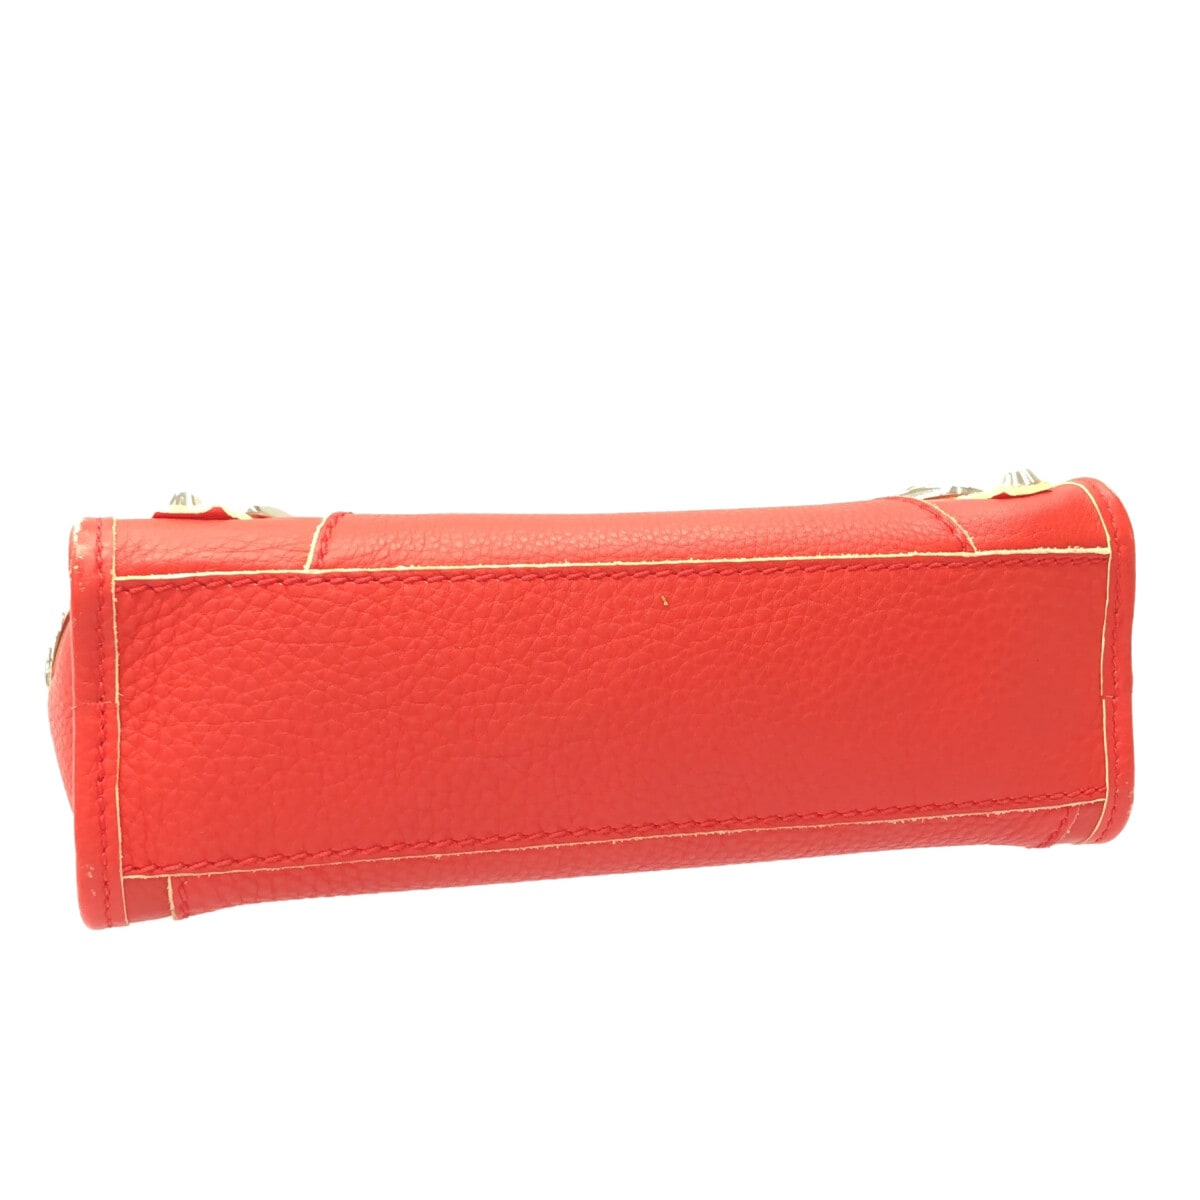 BALENCIAGA - Classic Mini City Handbag Red Leather